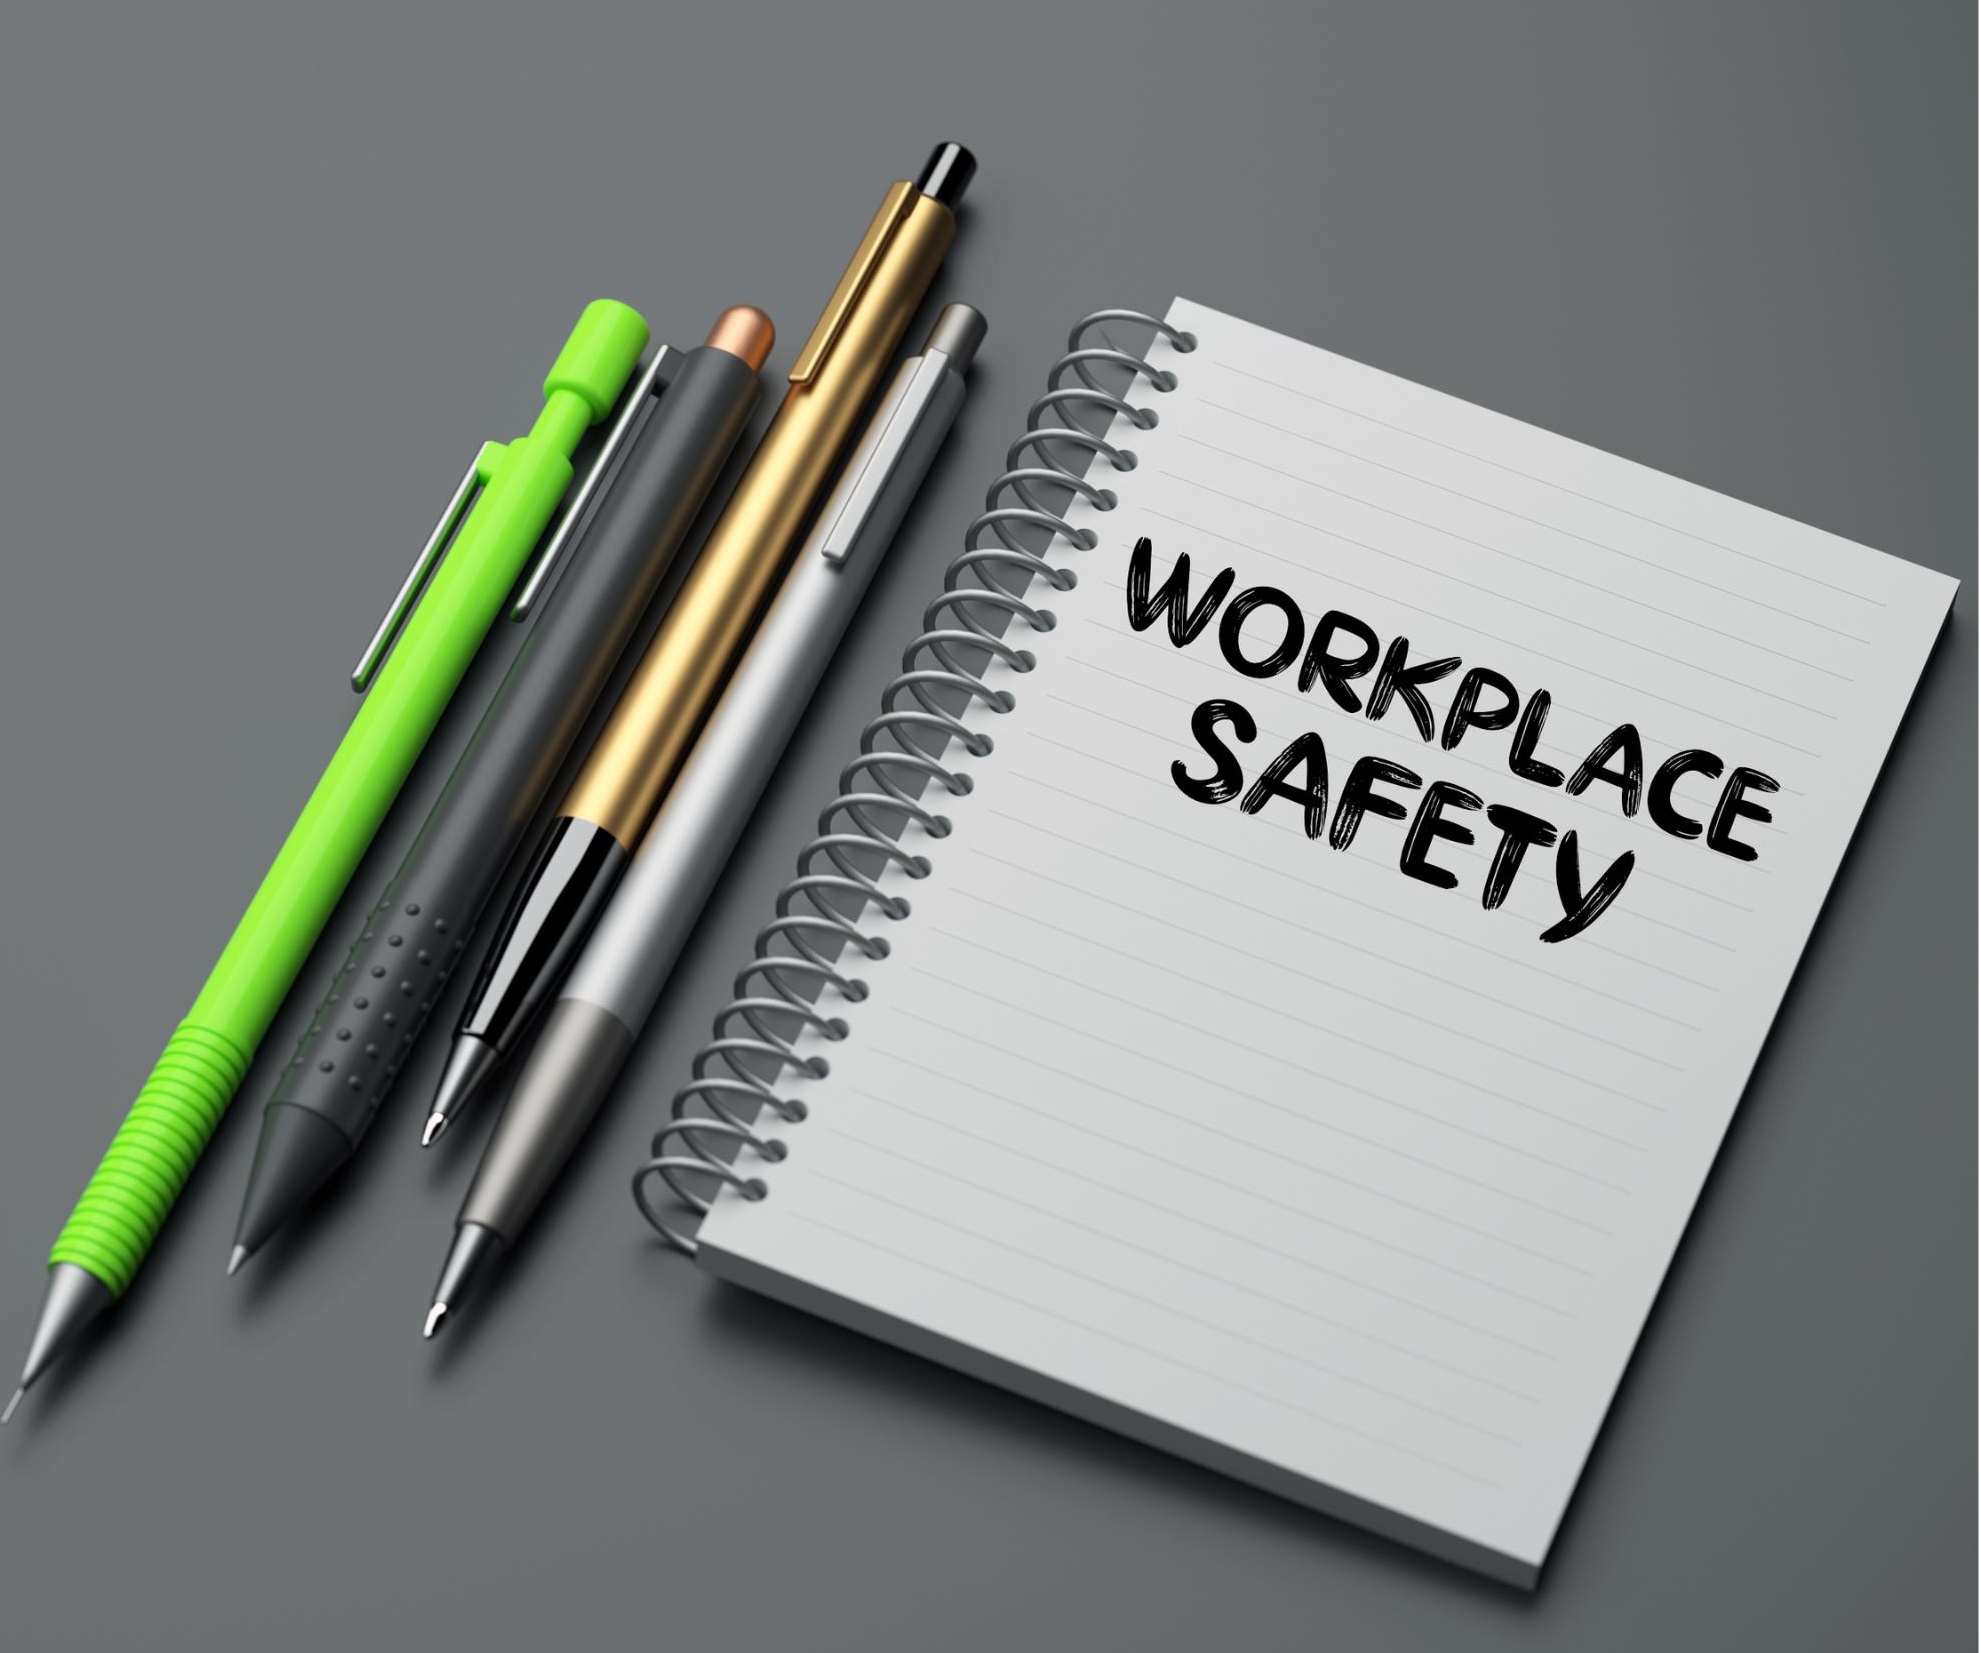 Bytor Center Workplace Safety Photo